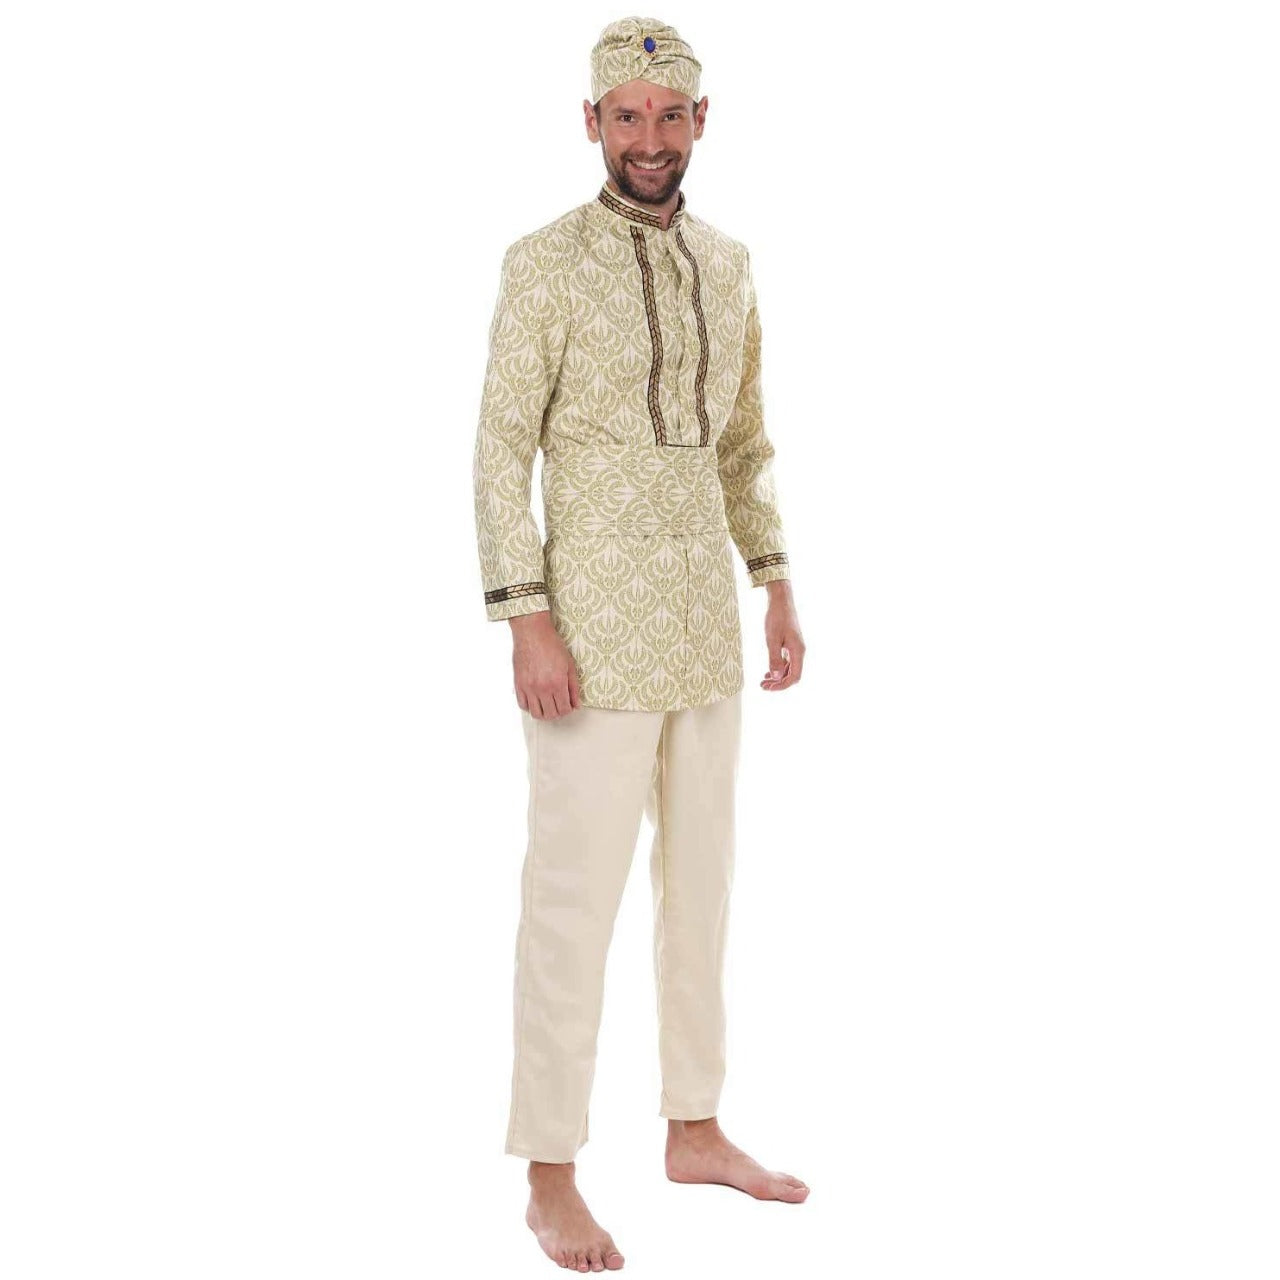 Acquista online il costume Hindu Hari per adulti